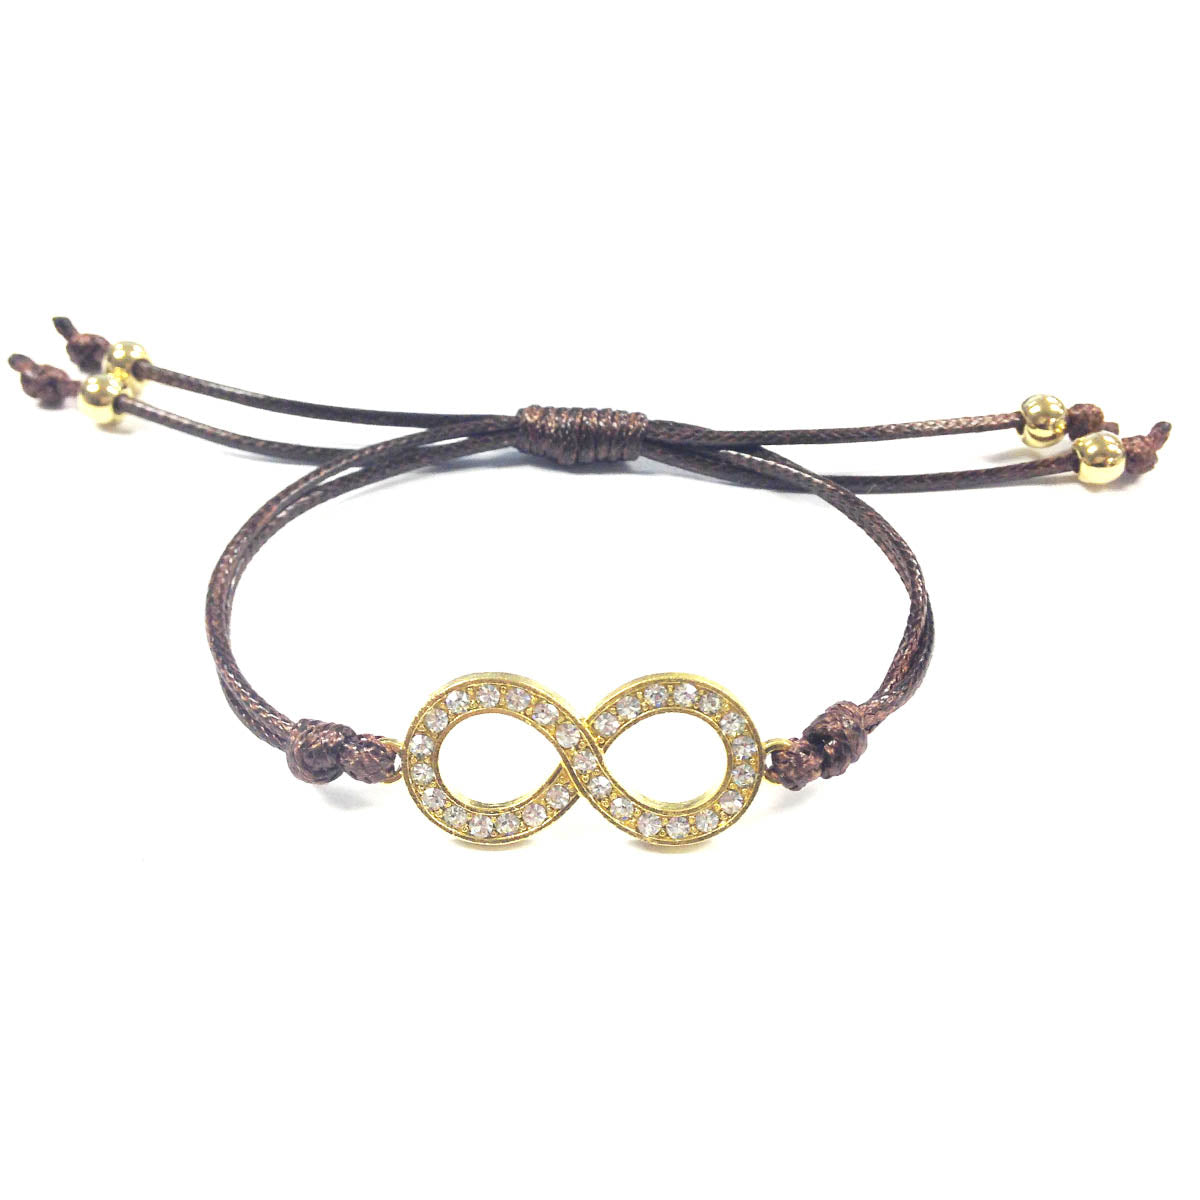 Wrapables Adjustable Rhinestone Infinity Leather Corded Bracelet